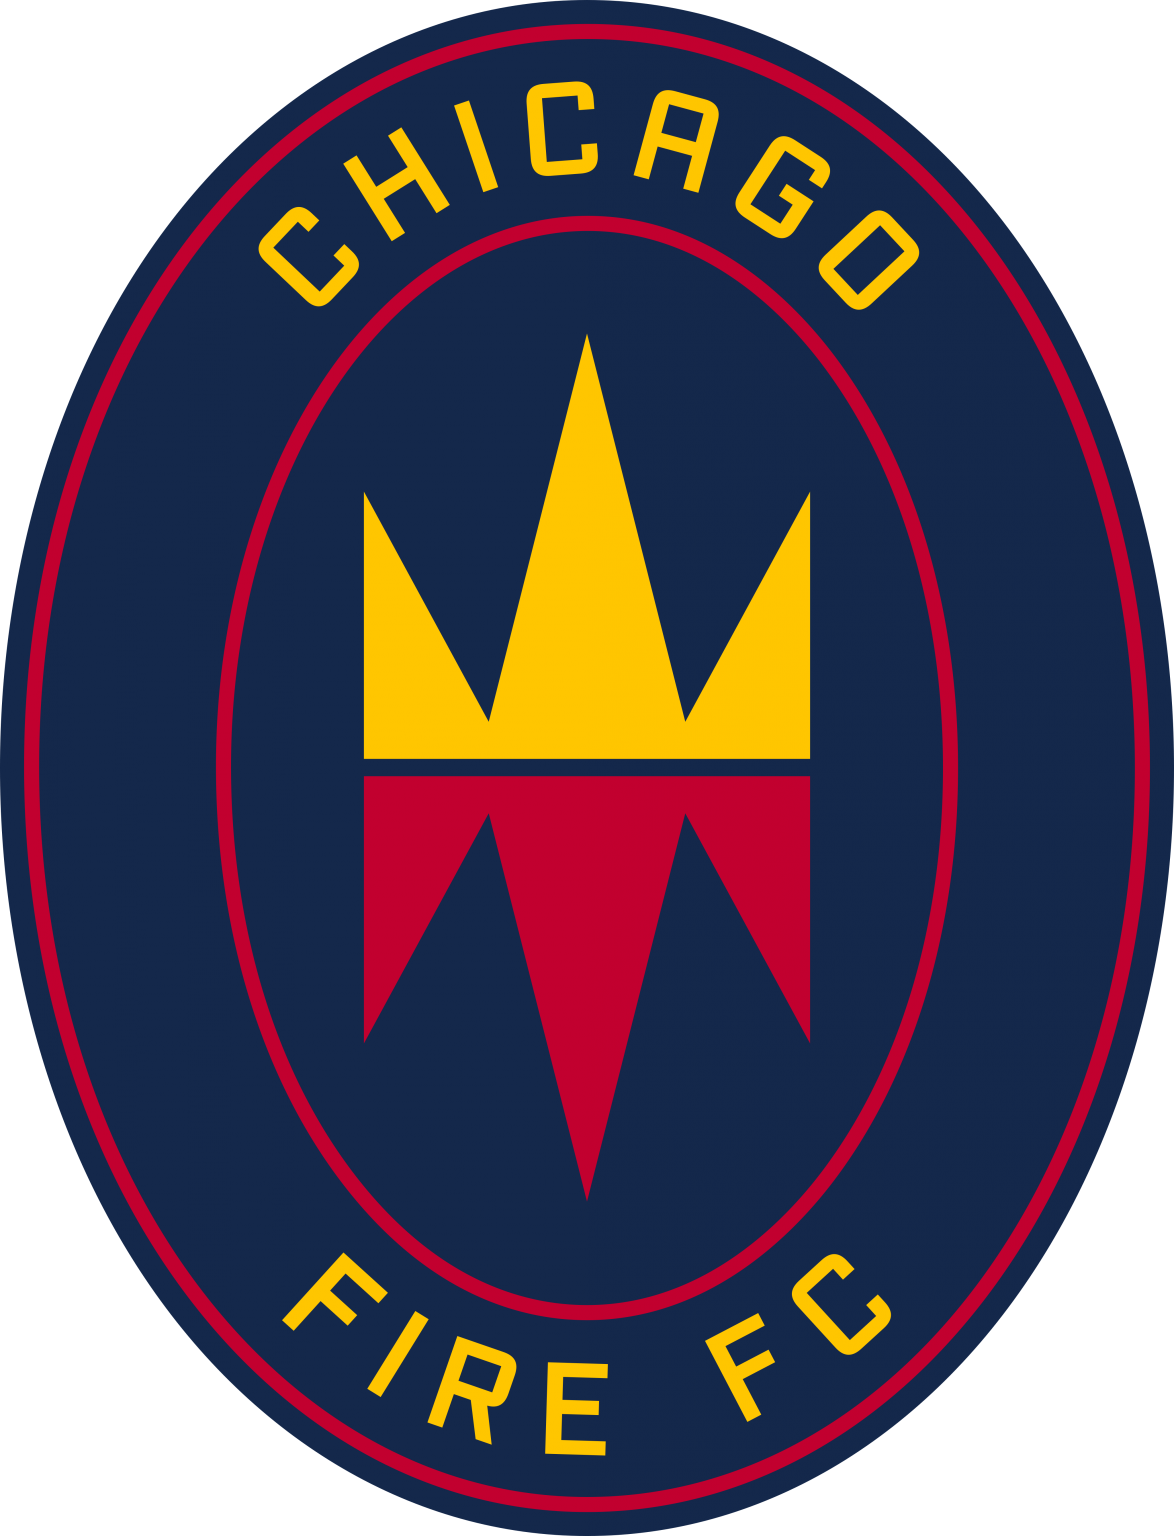 Chicago Fire FC logo Logo Download Logotipos PNG e Vetor